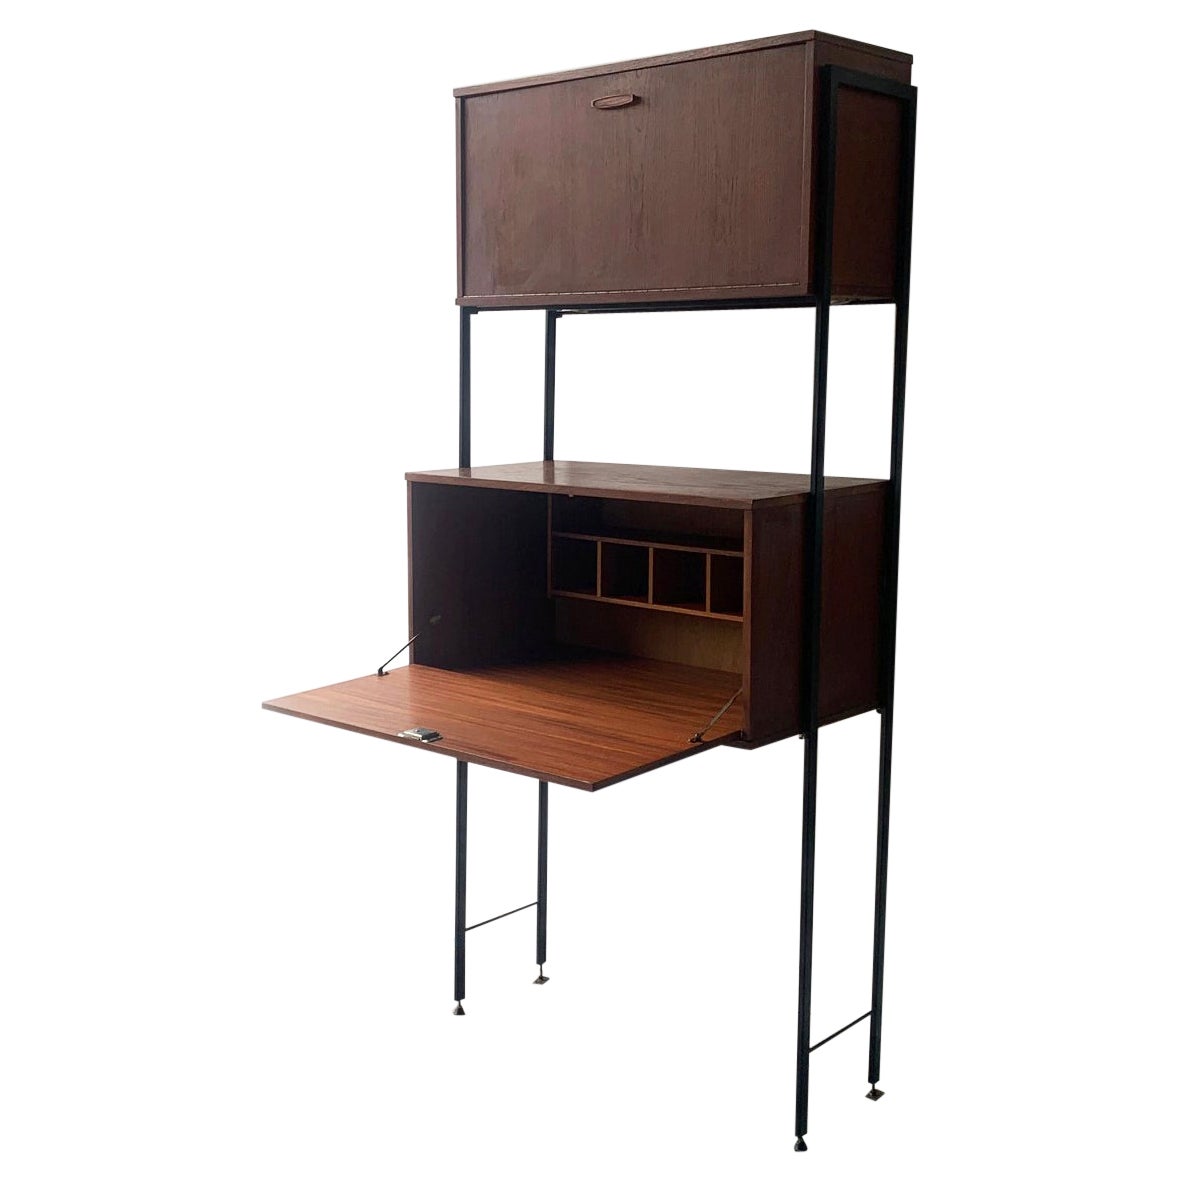 1960’s mid century teak wall unit with desk unit by Avalon